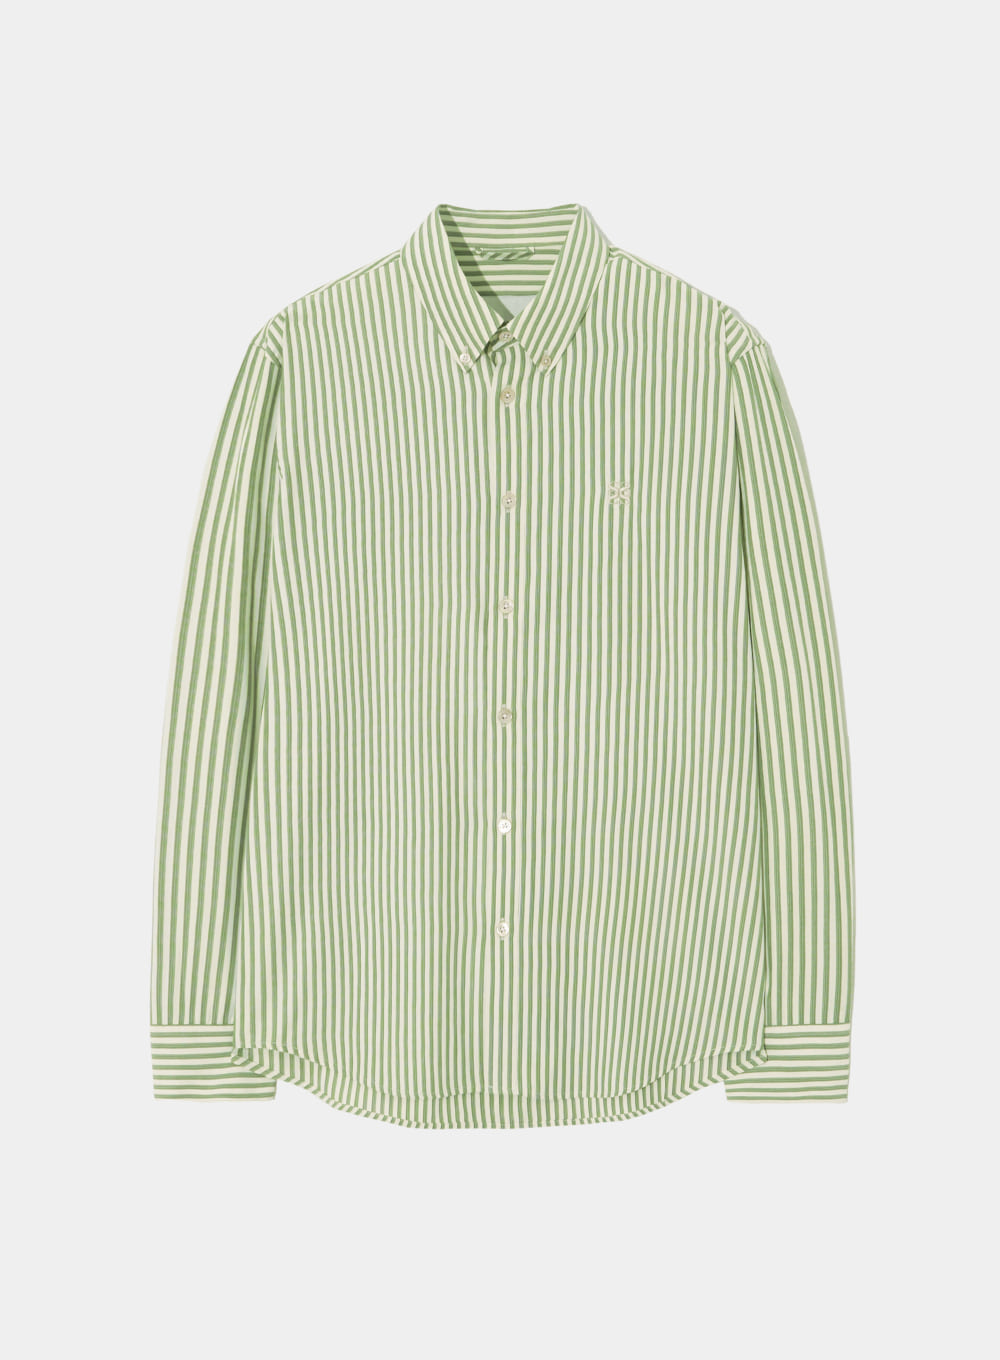 Satur All Day Stripe Basic Shirts - Natural Green